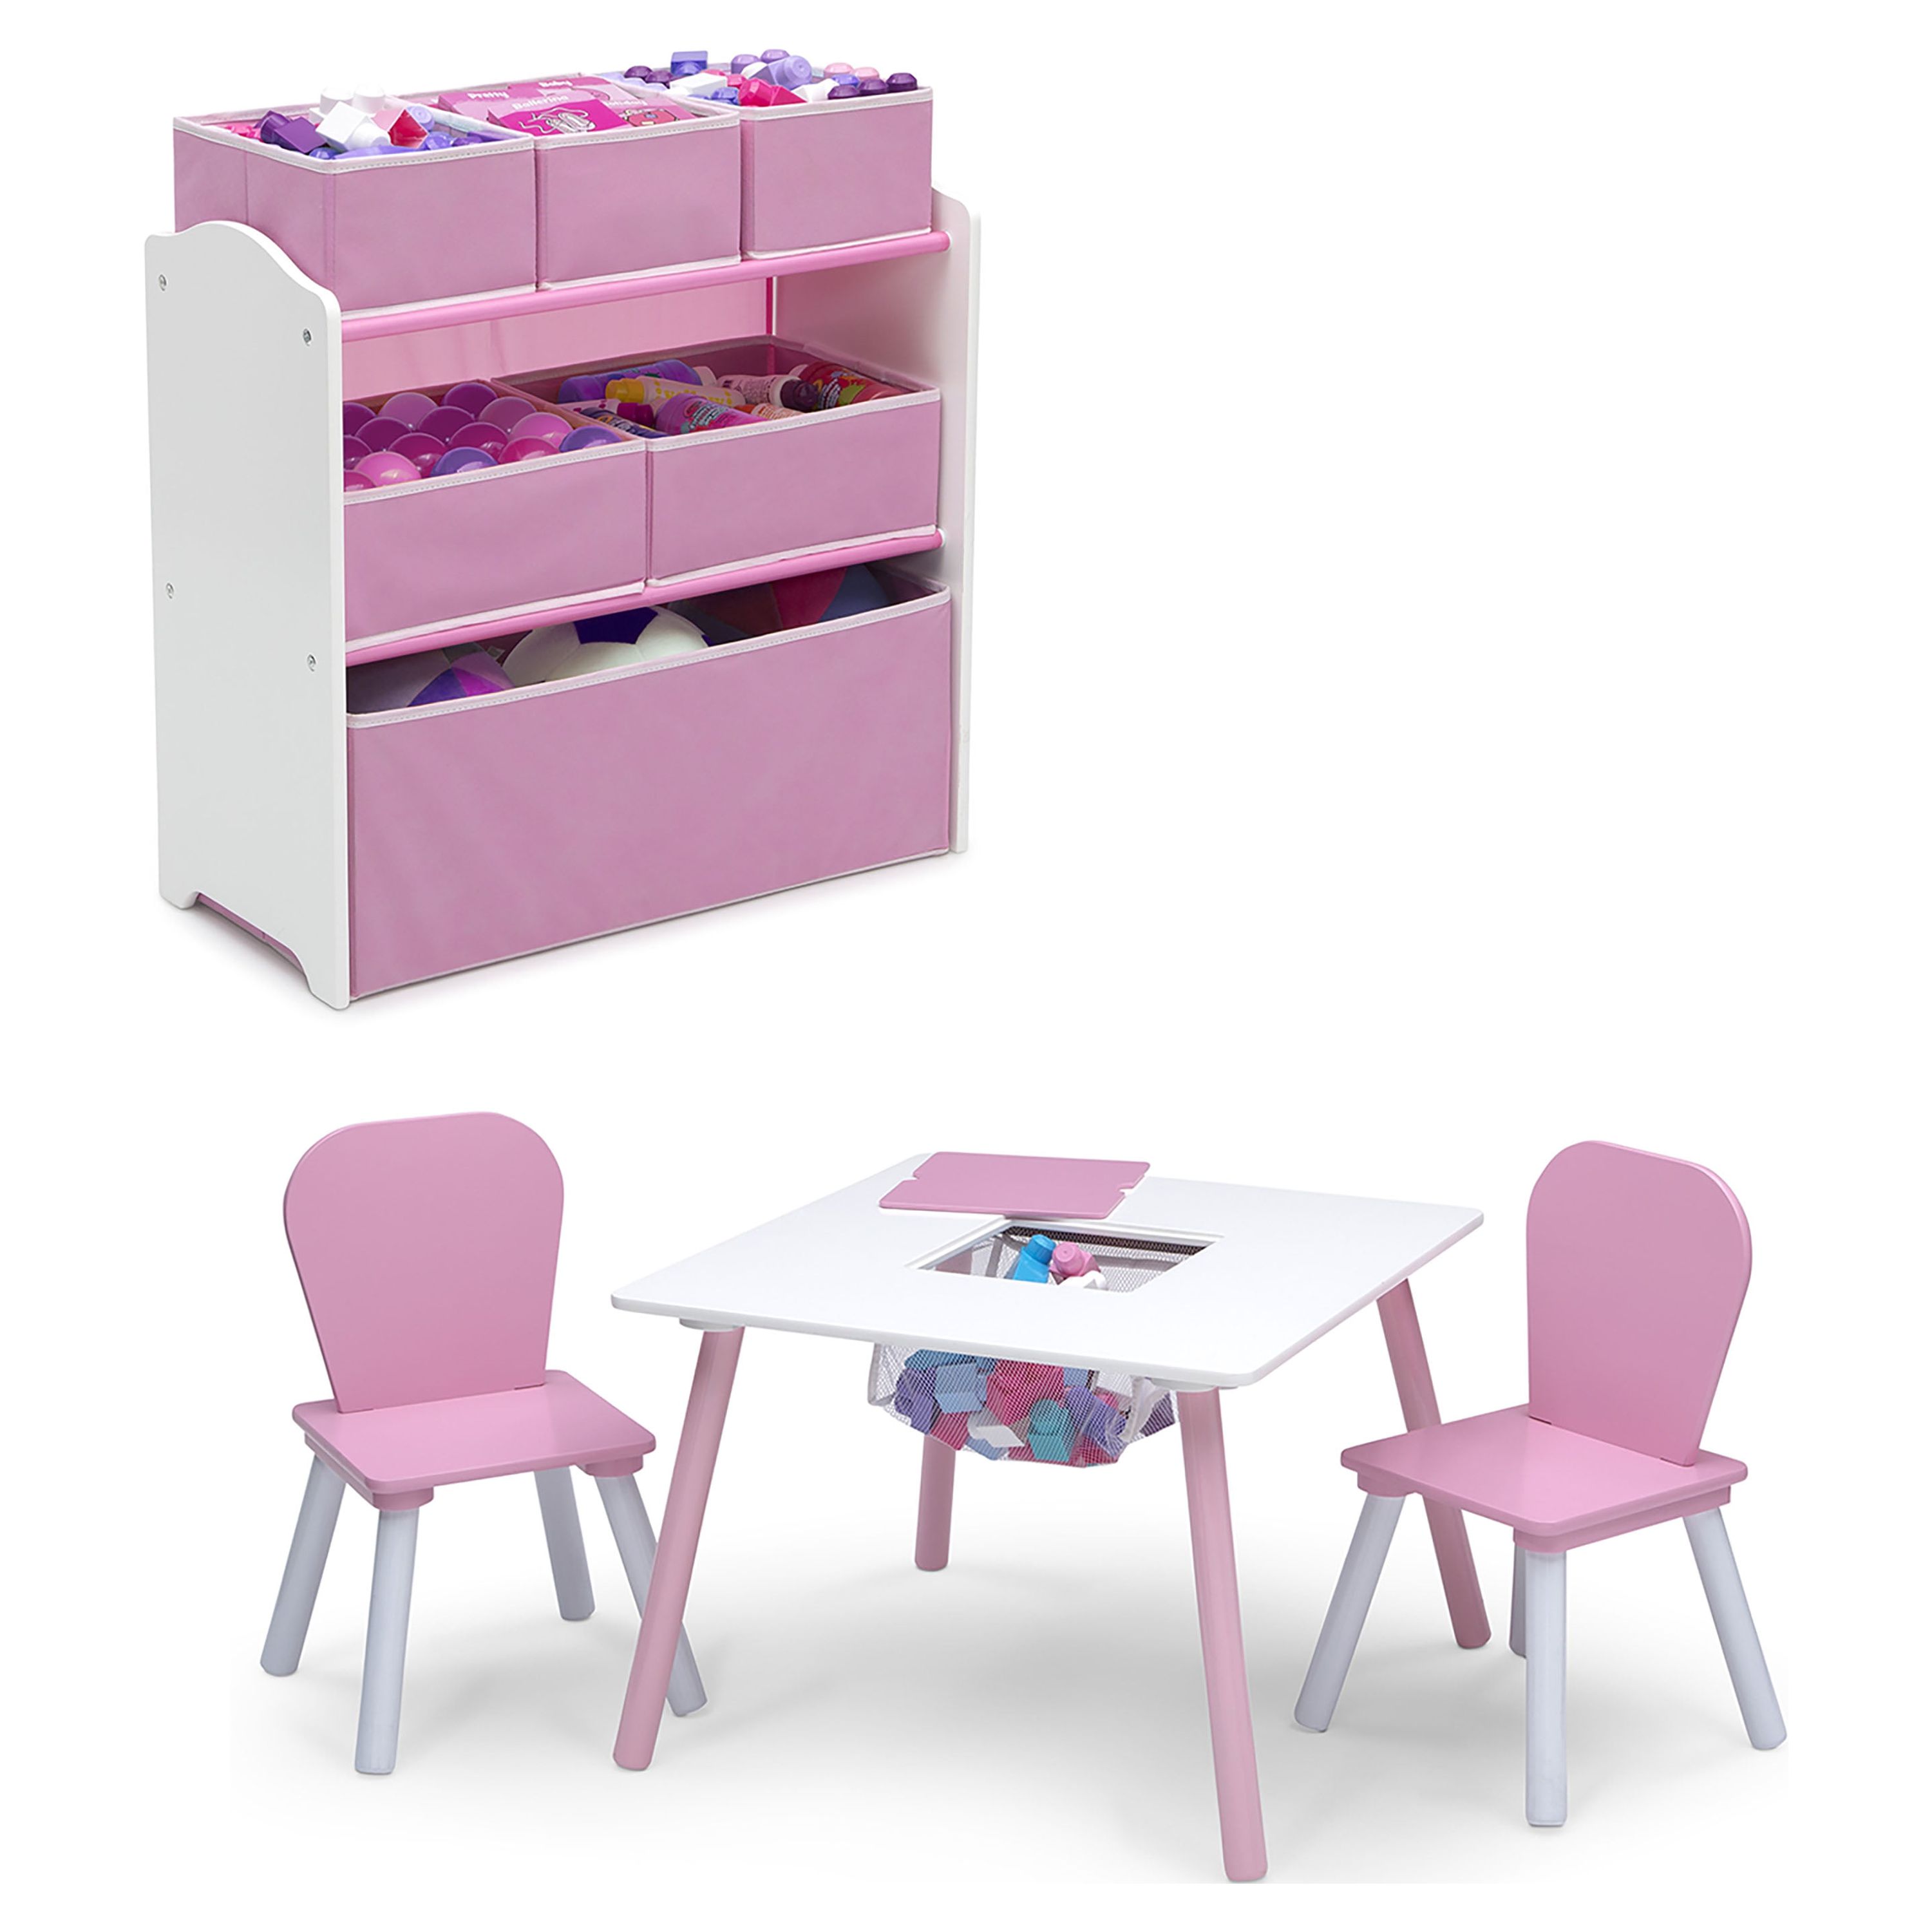 Delta Children 4-Piece Toddler Playroom Set, Pink/White - image 1 of 11